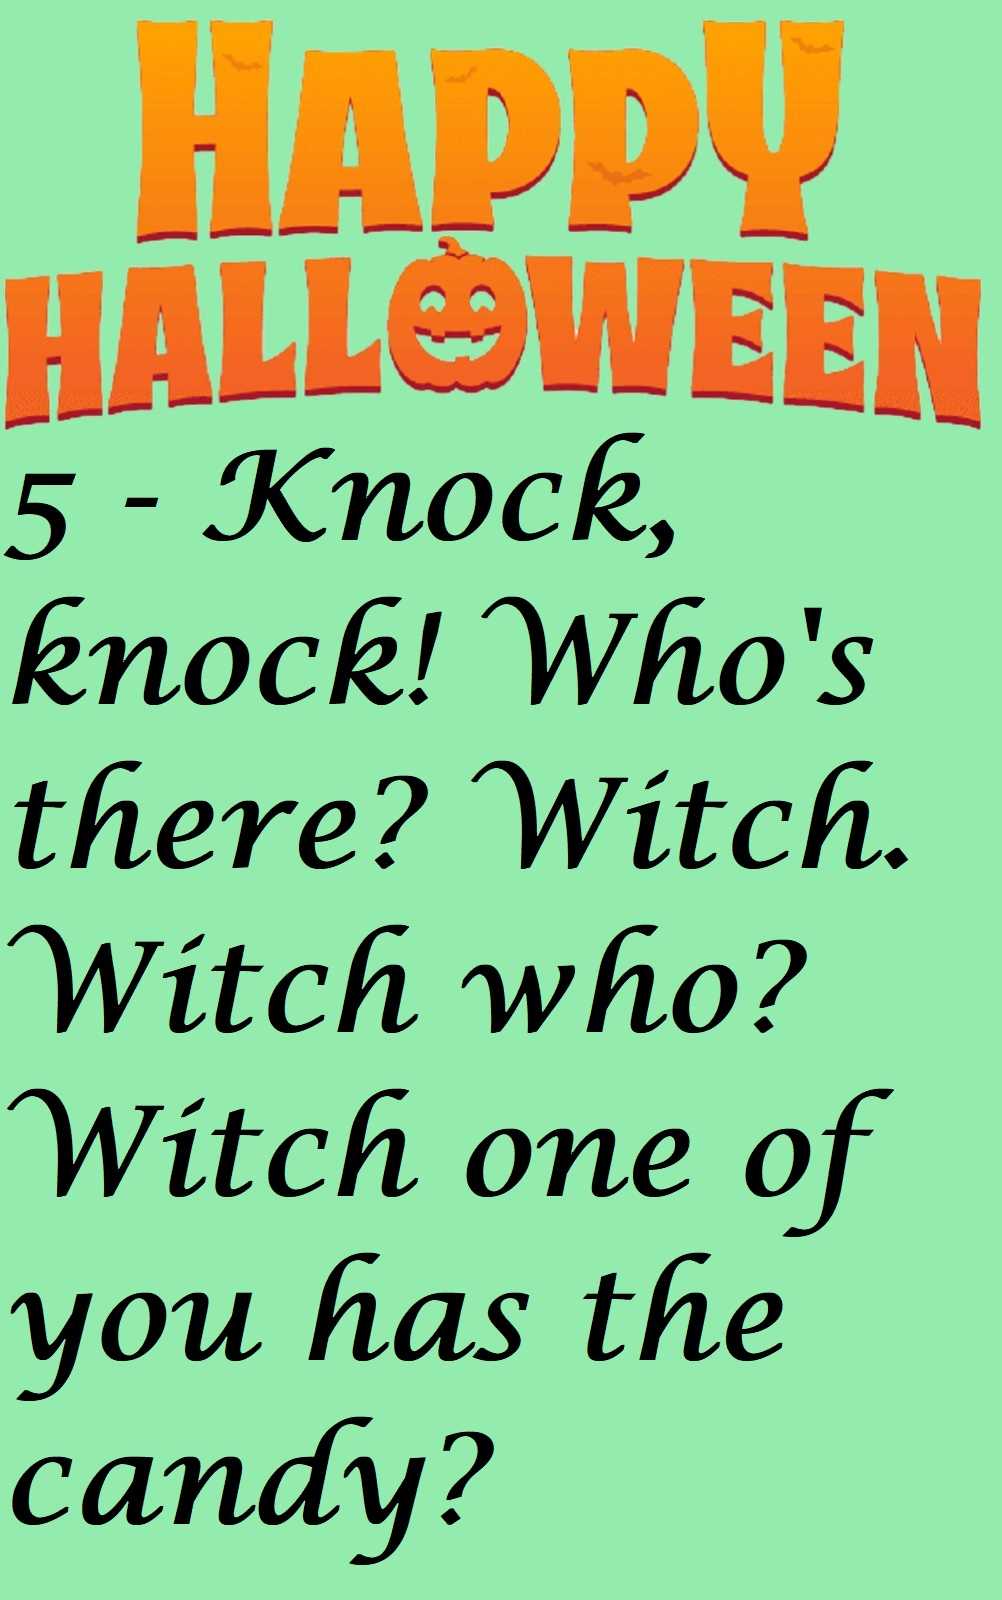 5 Halloween knock knock jokes - 17 Funny Halloween knock-knock Jokes For Kids And Adults